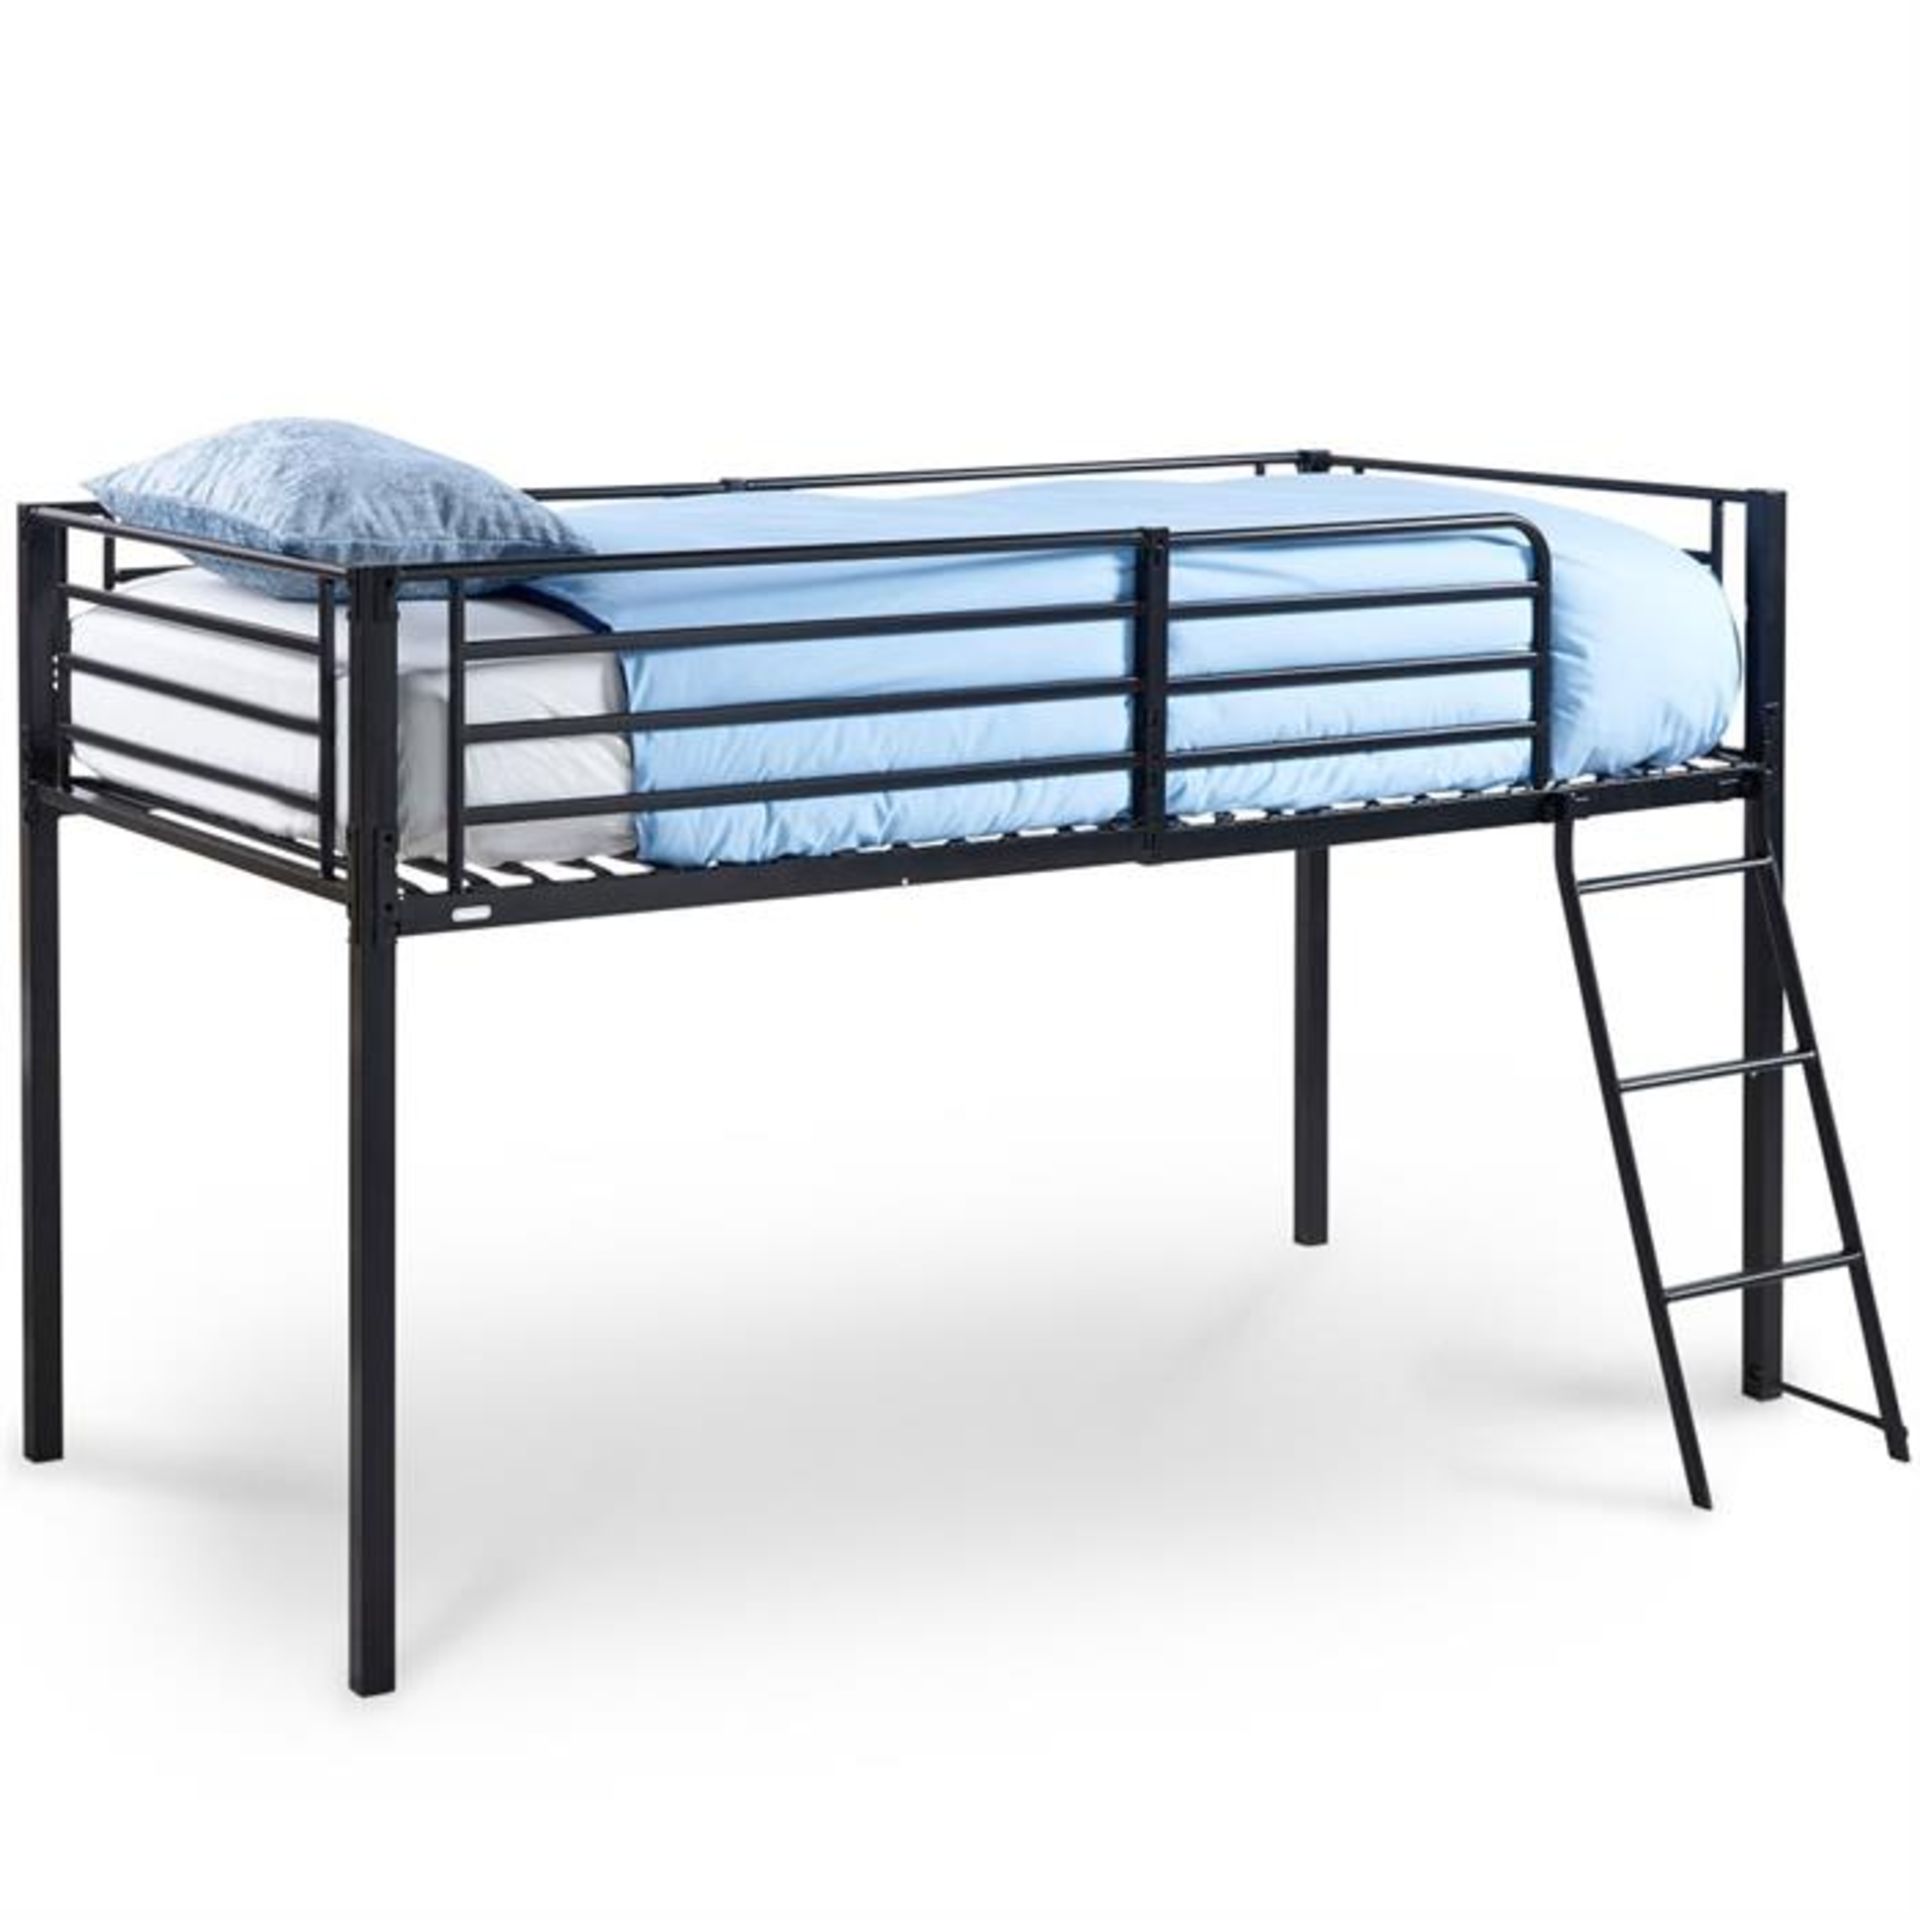 Bolt zero midi-sleeper Bed frame, Silver, measurements; 197 X 95.5 X 115.2cm (Length X Width X